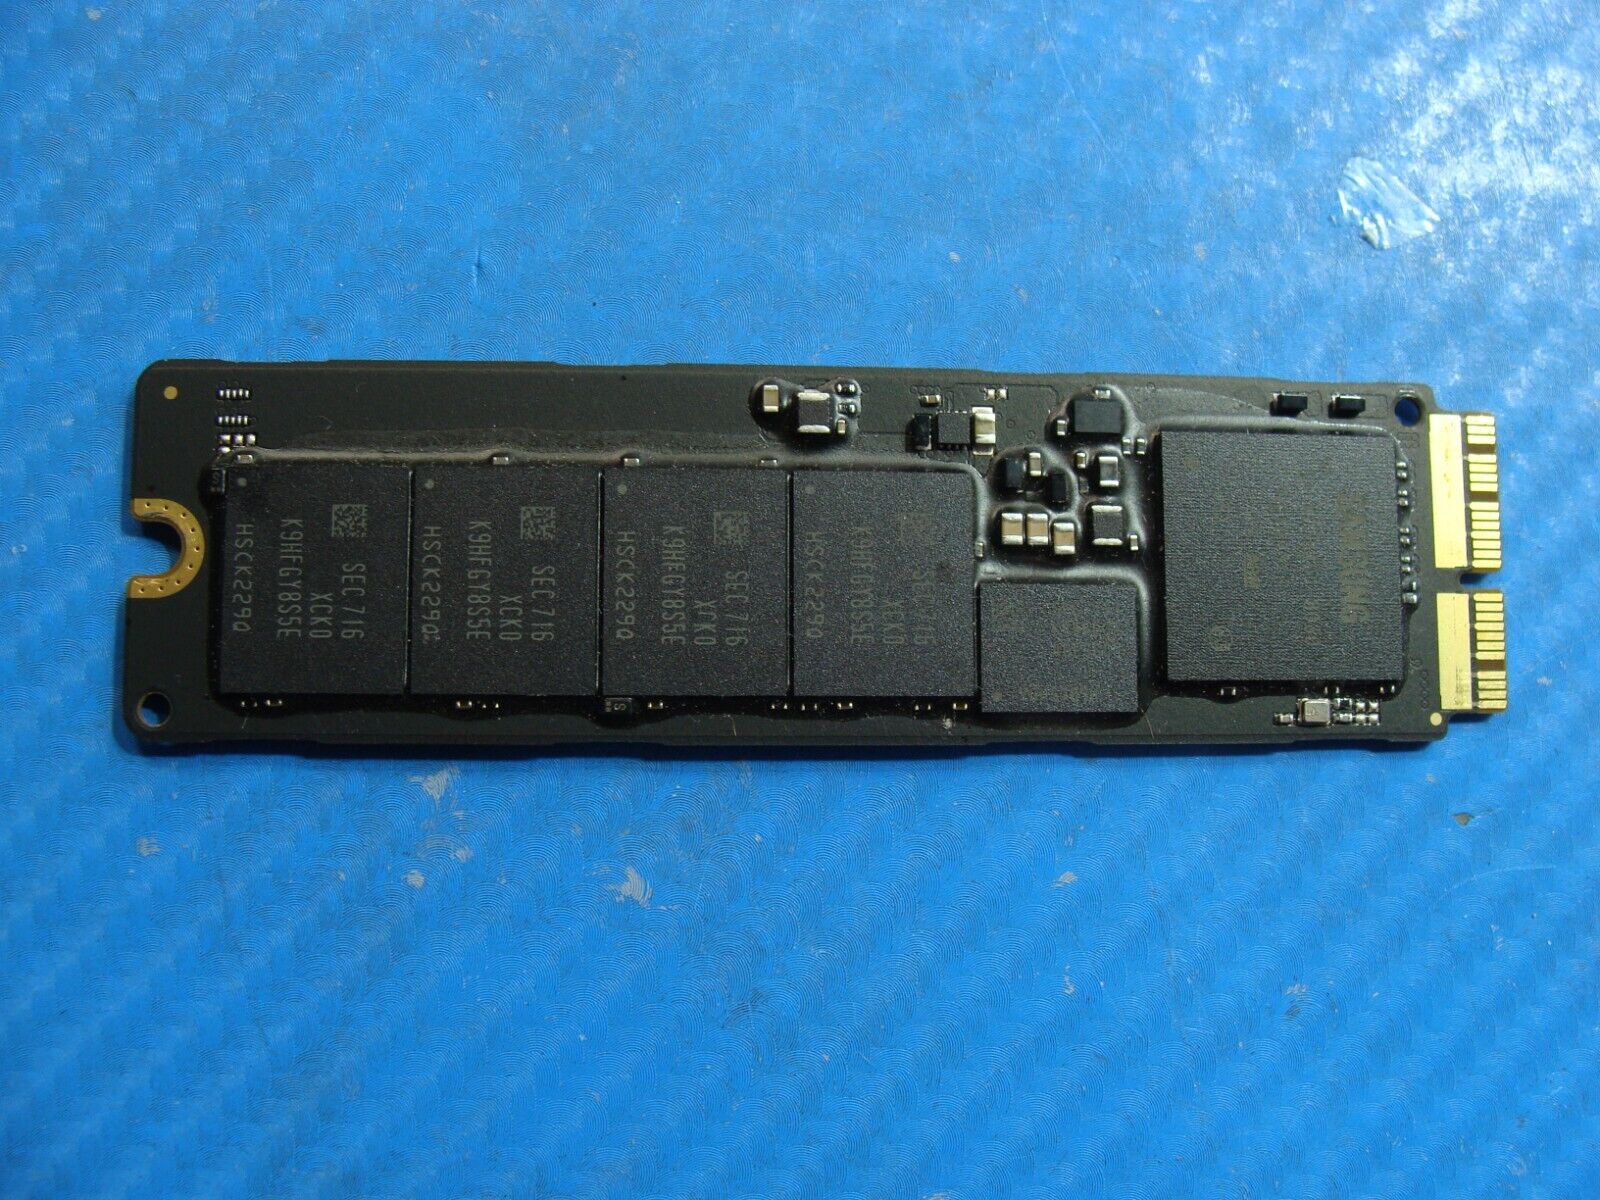 MacBook Air A1466 Samsung 256GB SSD Solid State Drive MZ-JPV256S/0A2 655-1959A